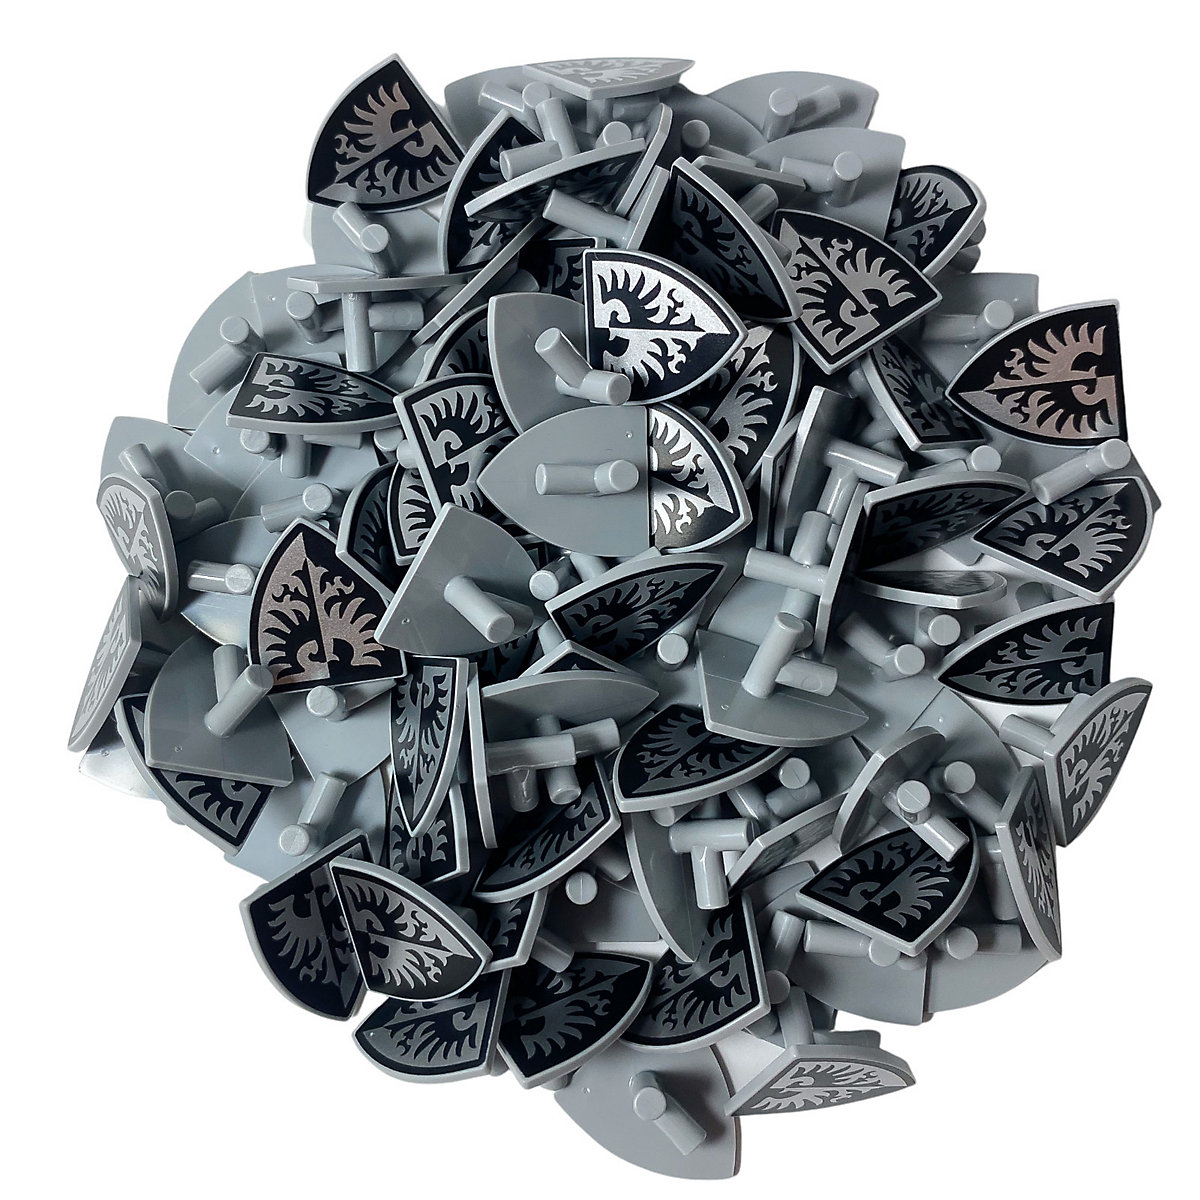 LEGO® Schilder Ritter Minifigur Shields knight 75114 NEU! Menge 5x